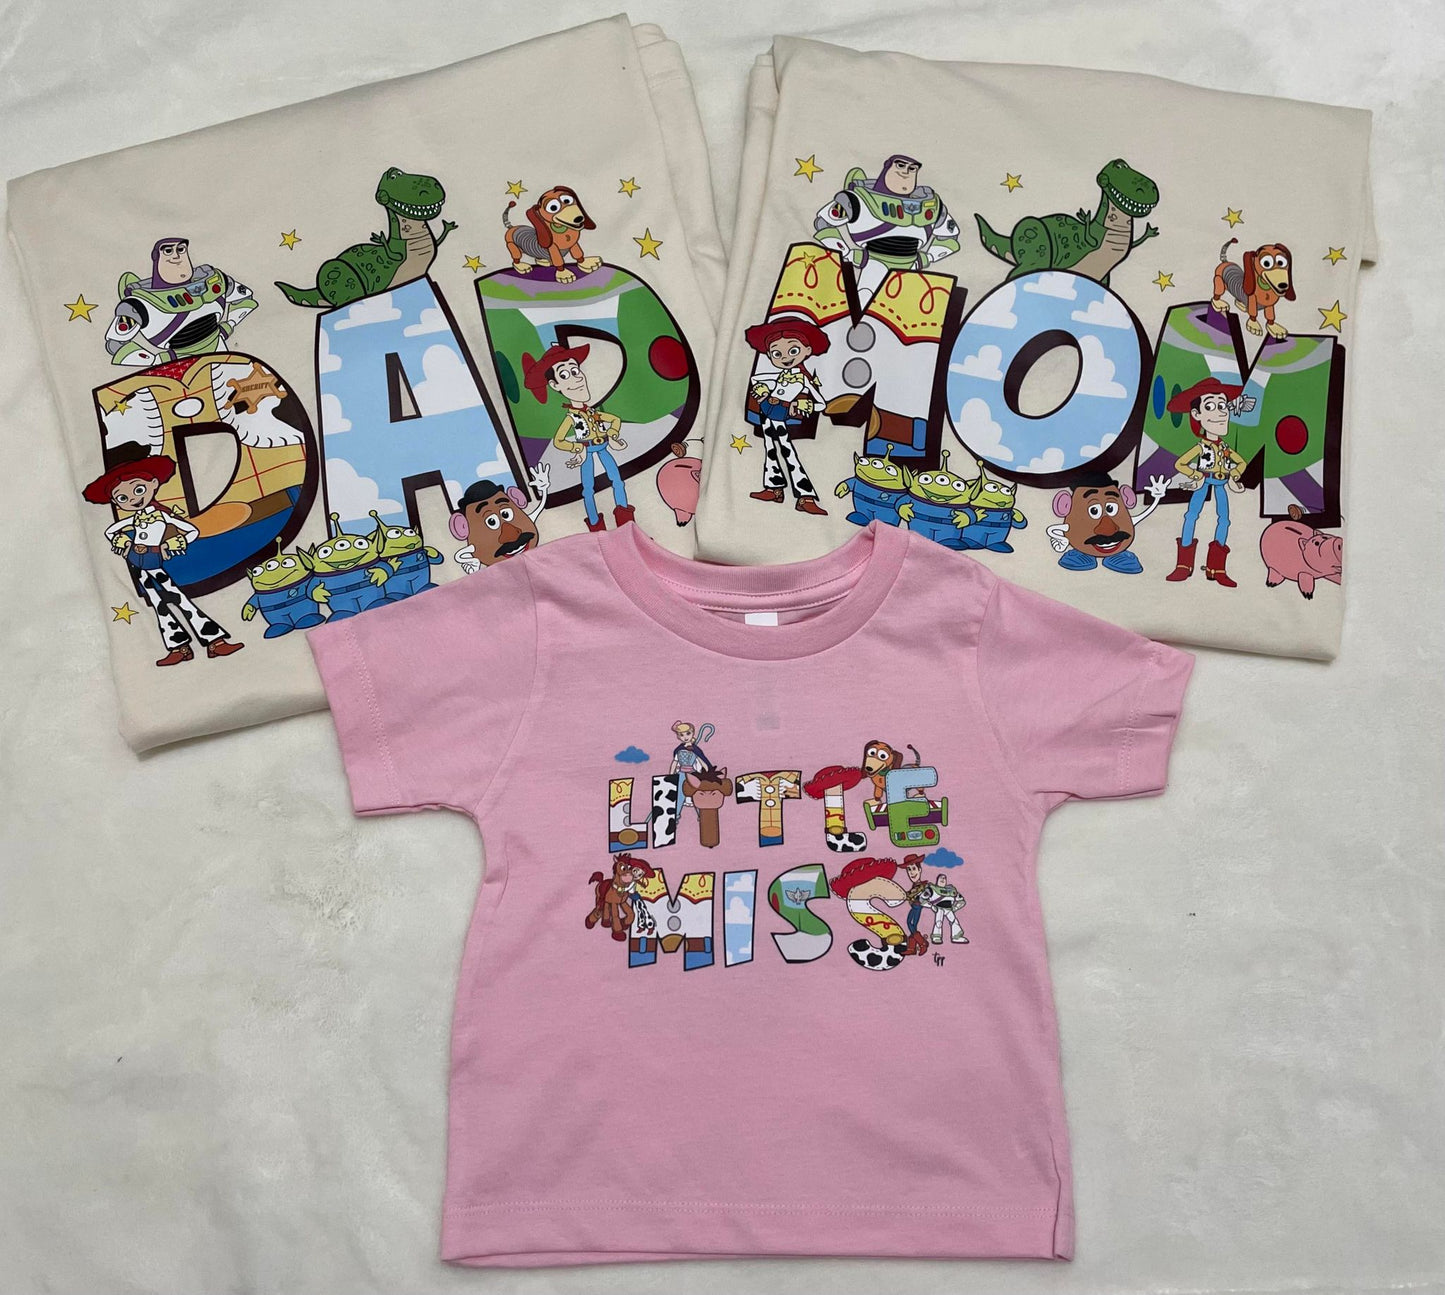 Disney Toy story custom adult shirts "MOM"